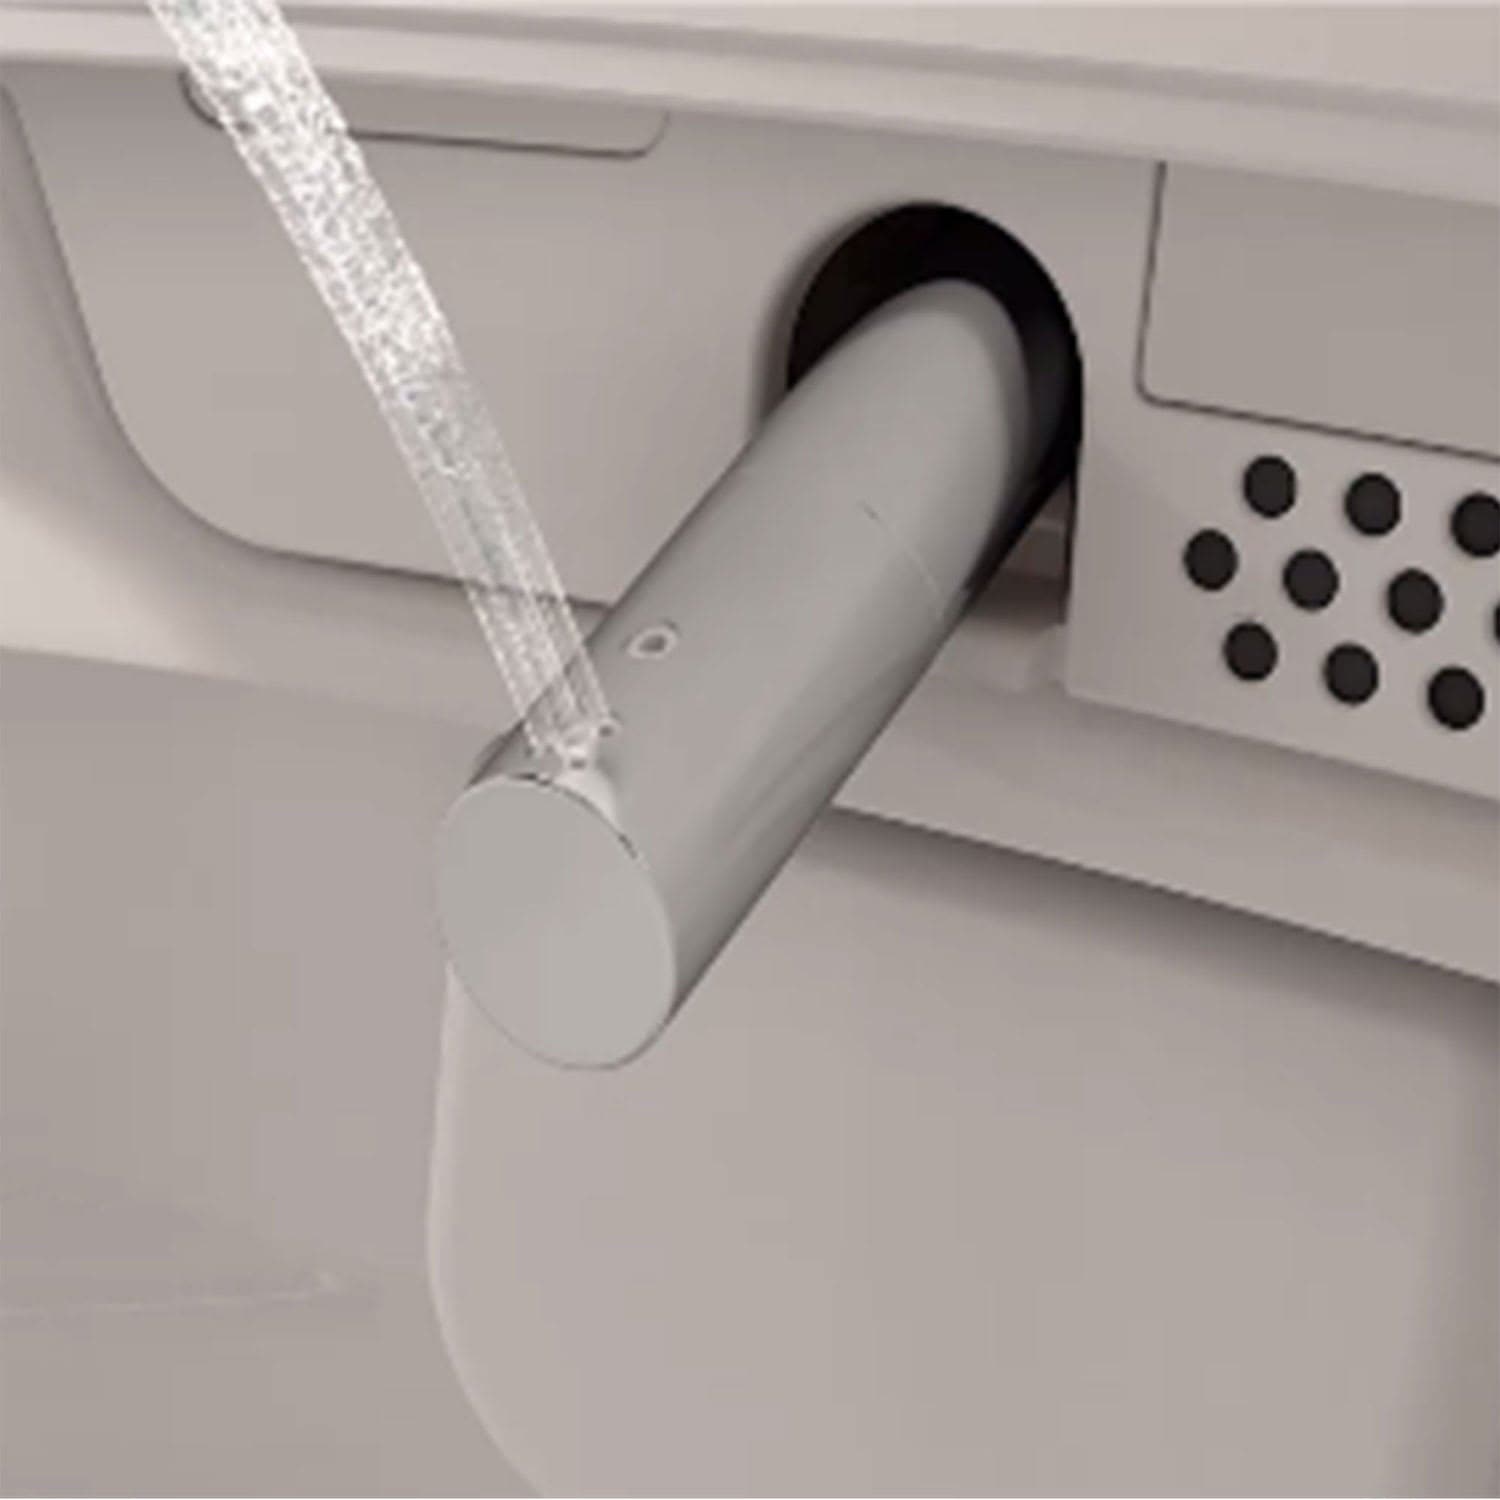 VitrA V-Care Prime Dusch-Stand-WC mit Sitzautomatik Deckel Thermoplast Weiß Hochglanz